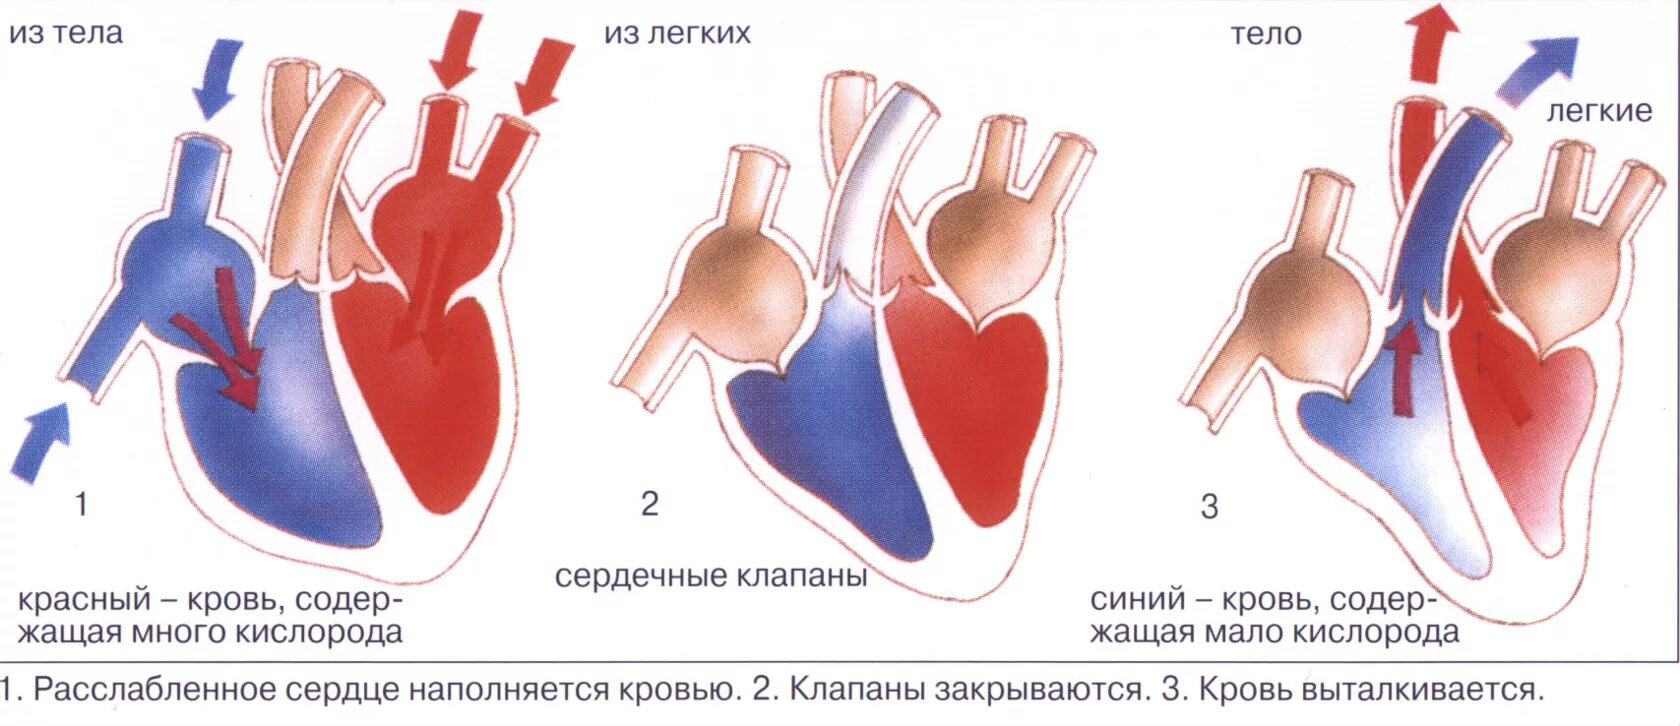 Сокращение мышц и работа сердца. Строение сердца. Строение сердца человека. Работа сердца. Сокращение камер сердца.